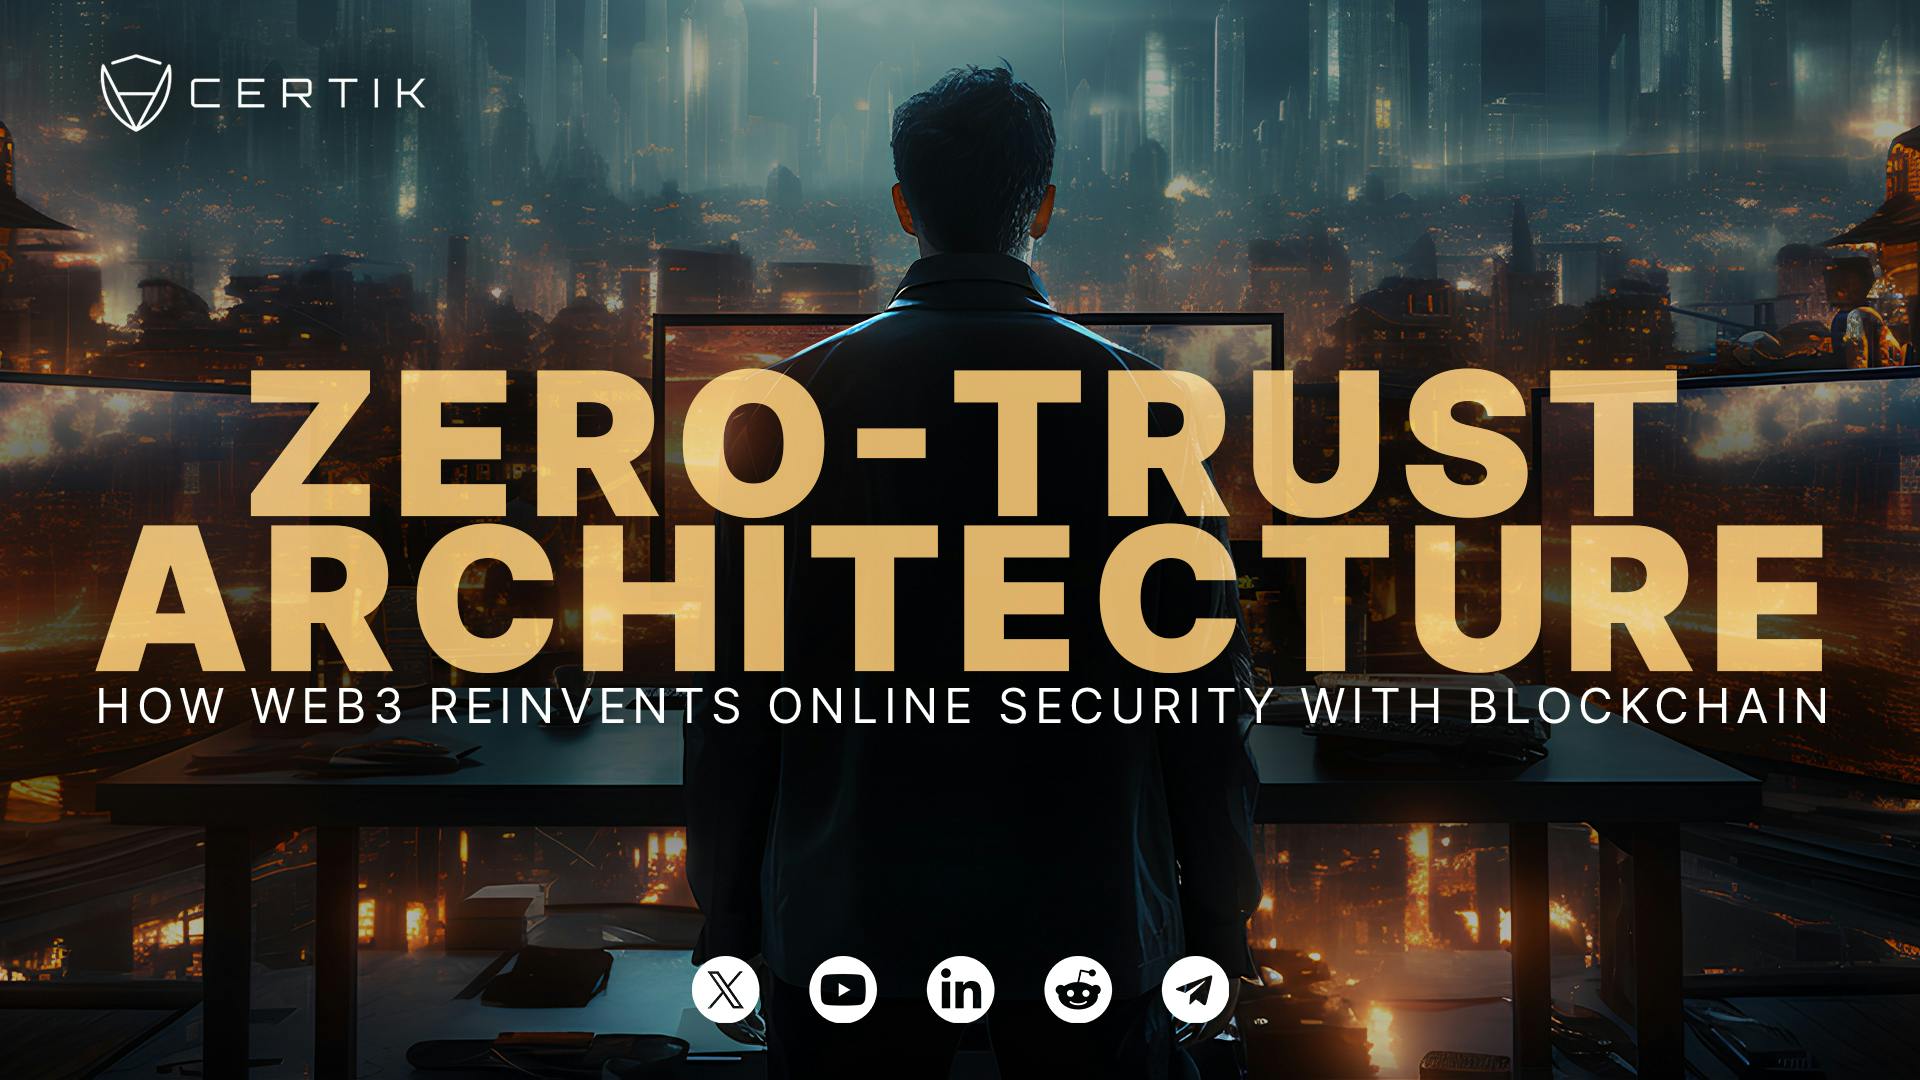 Zero-Trust Architecture: How Web3 Reinvents Online Security with Blockchain